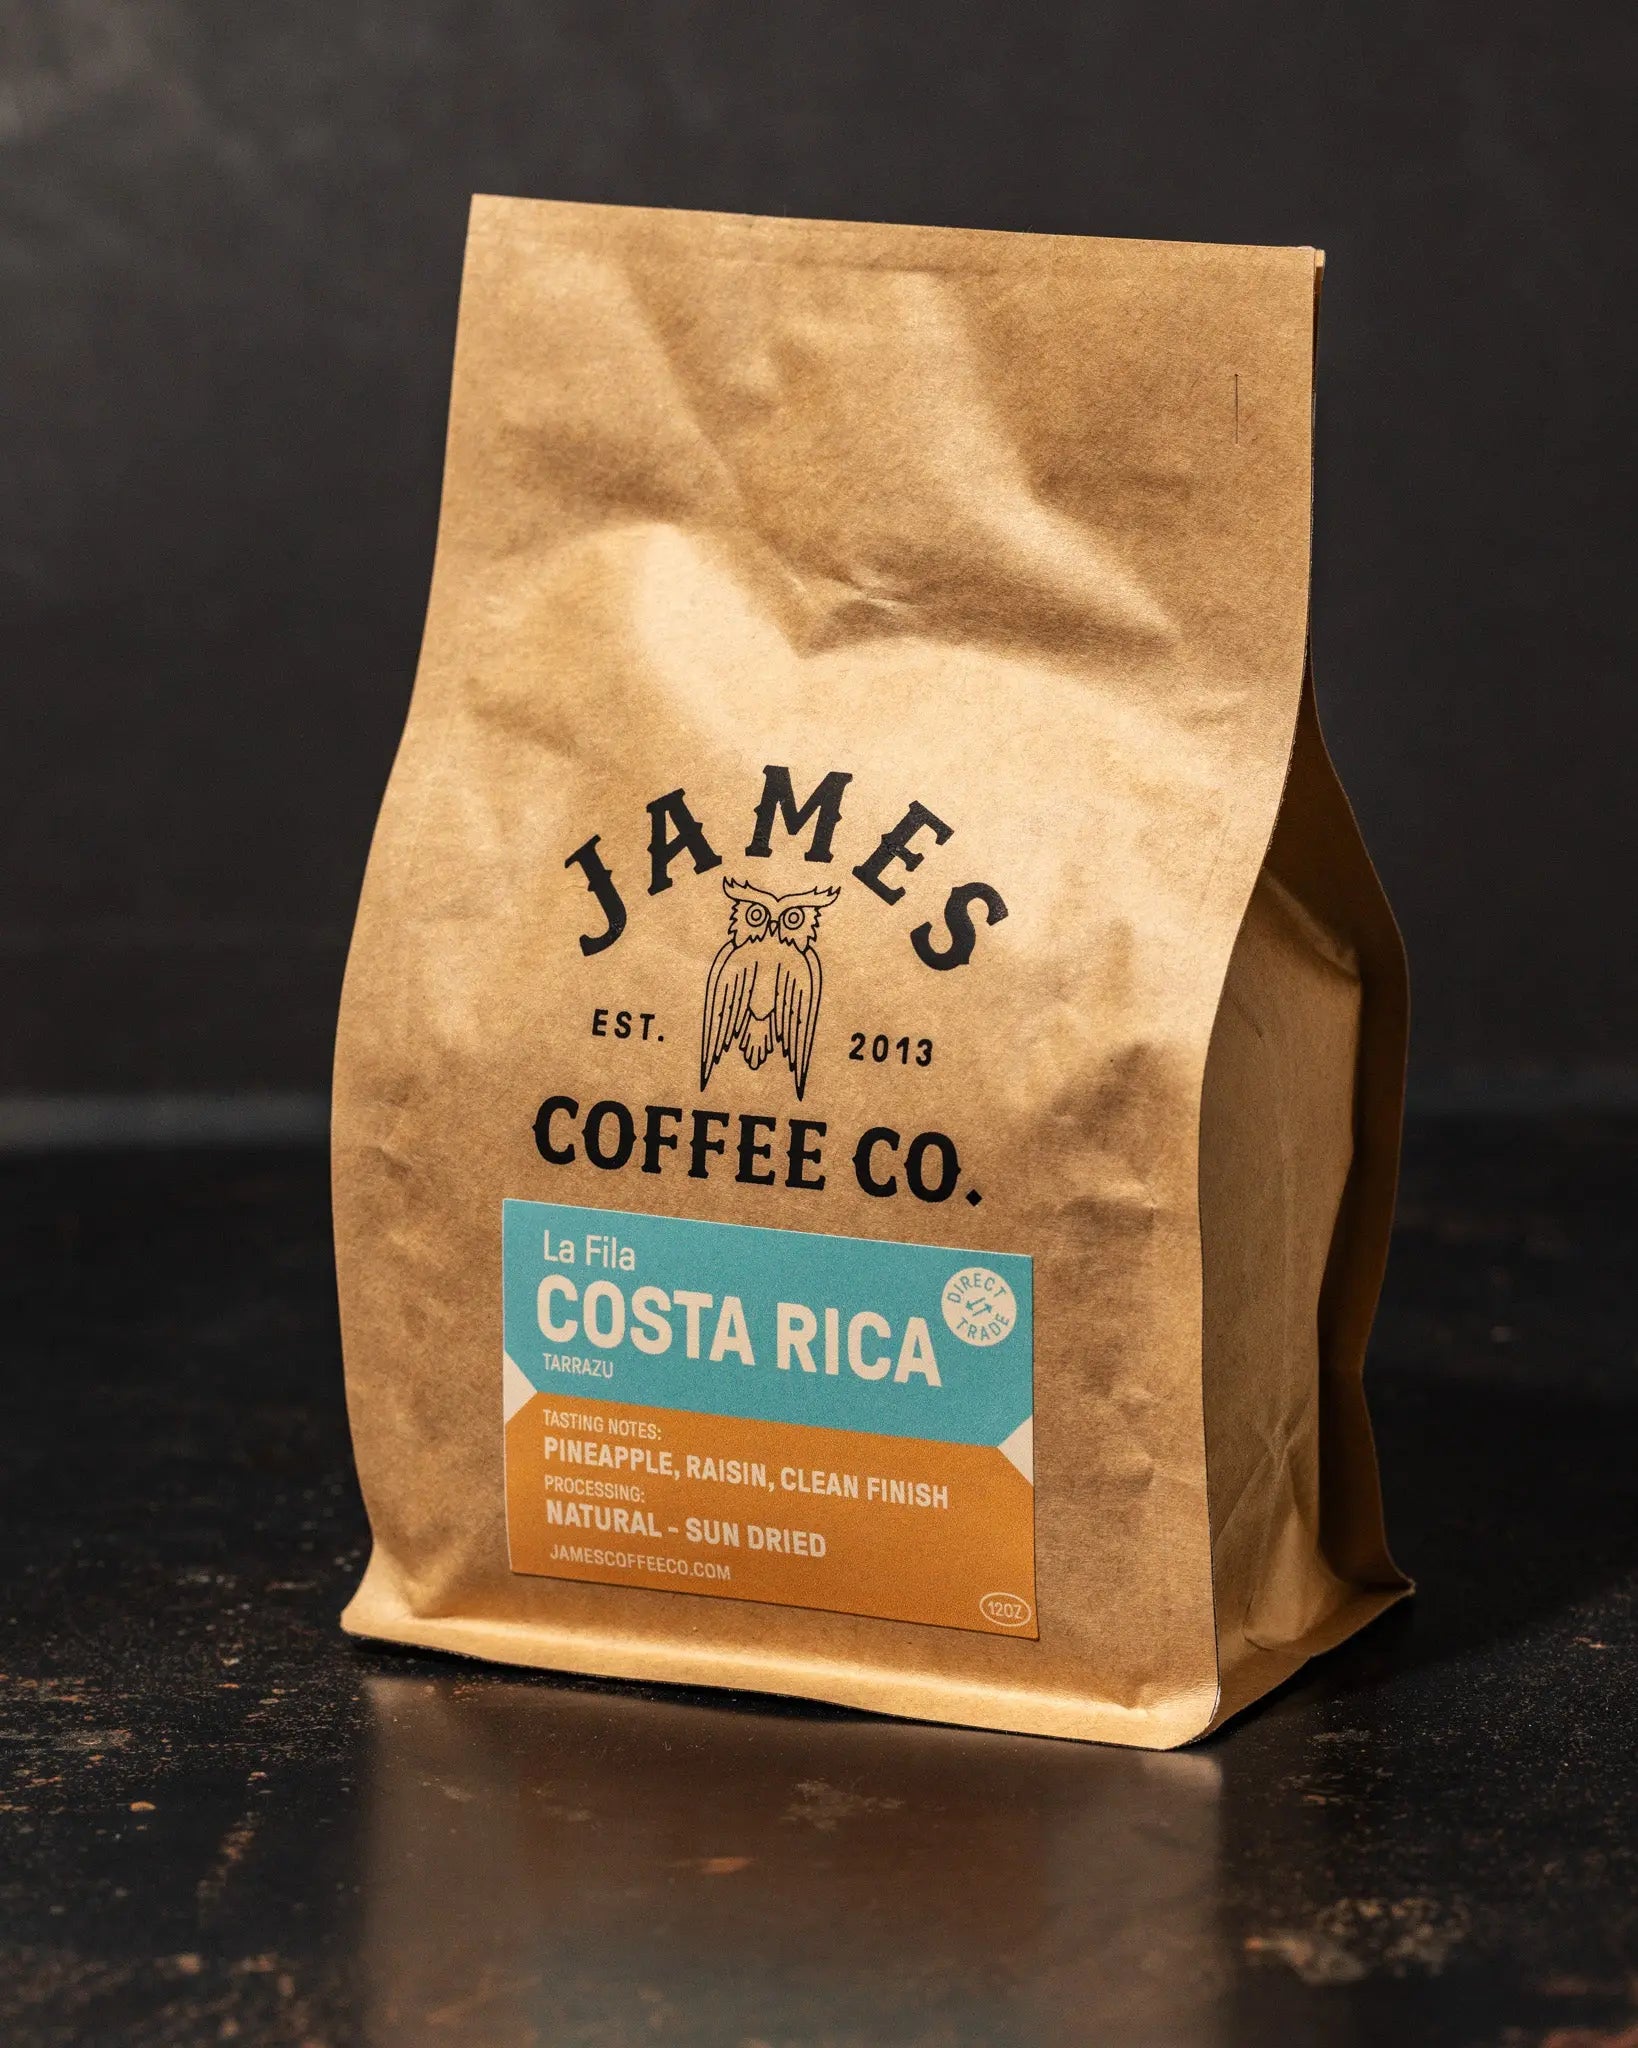 Costa Rica Tarrazu "La Fila" - Direct Trade James Coffee Co.